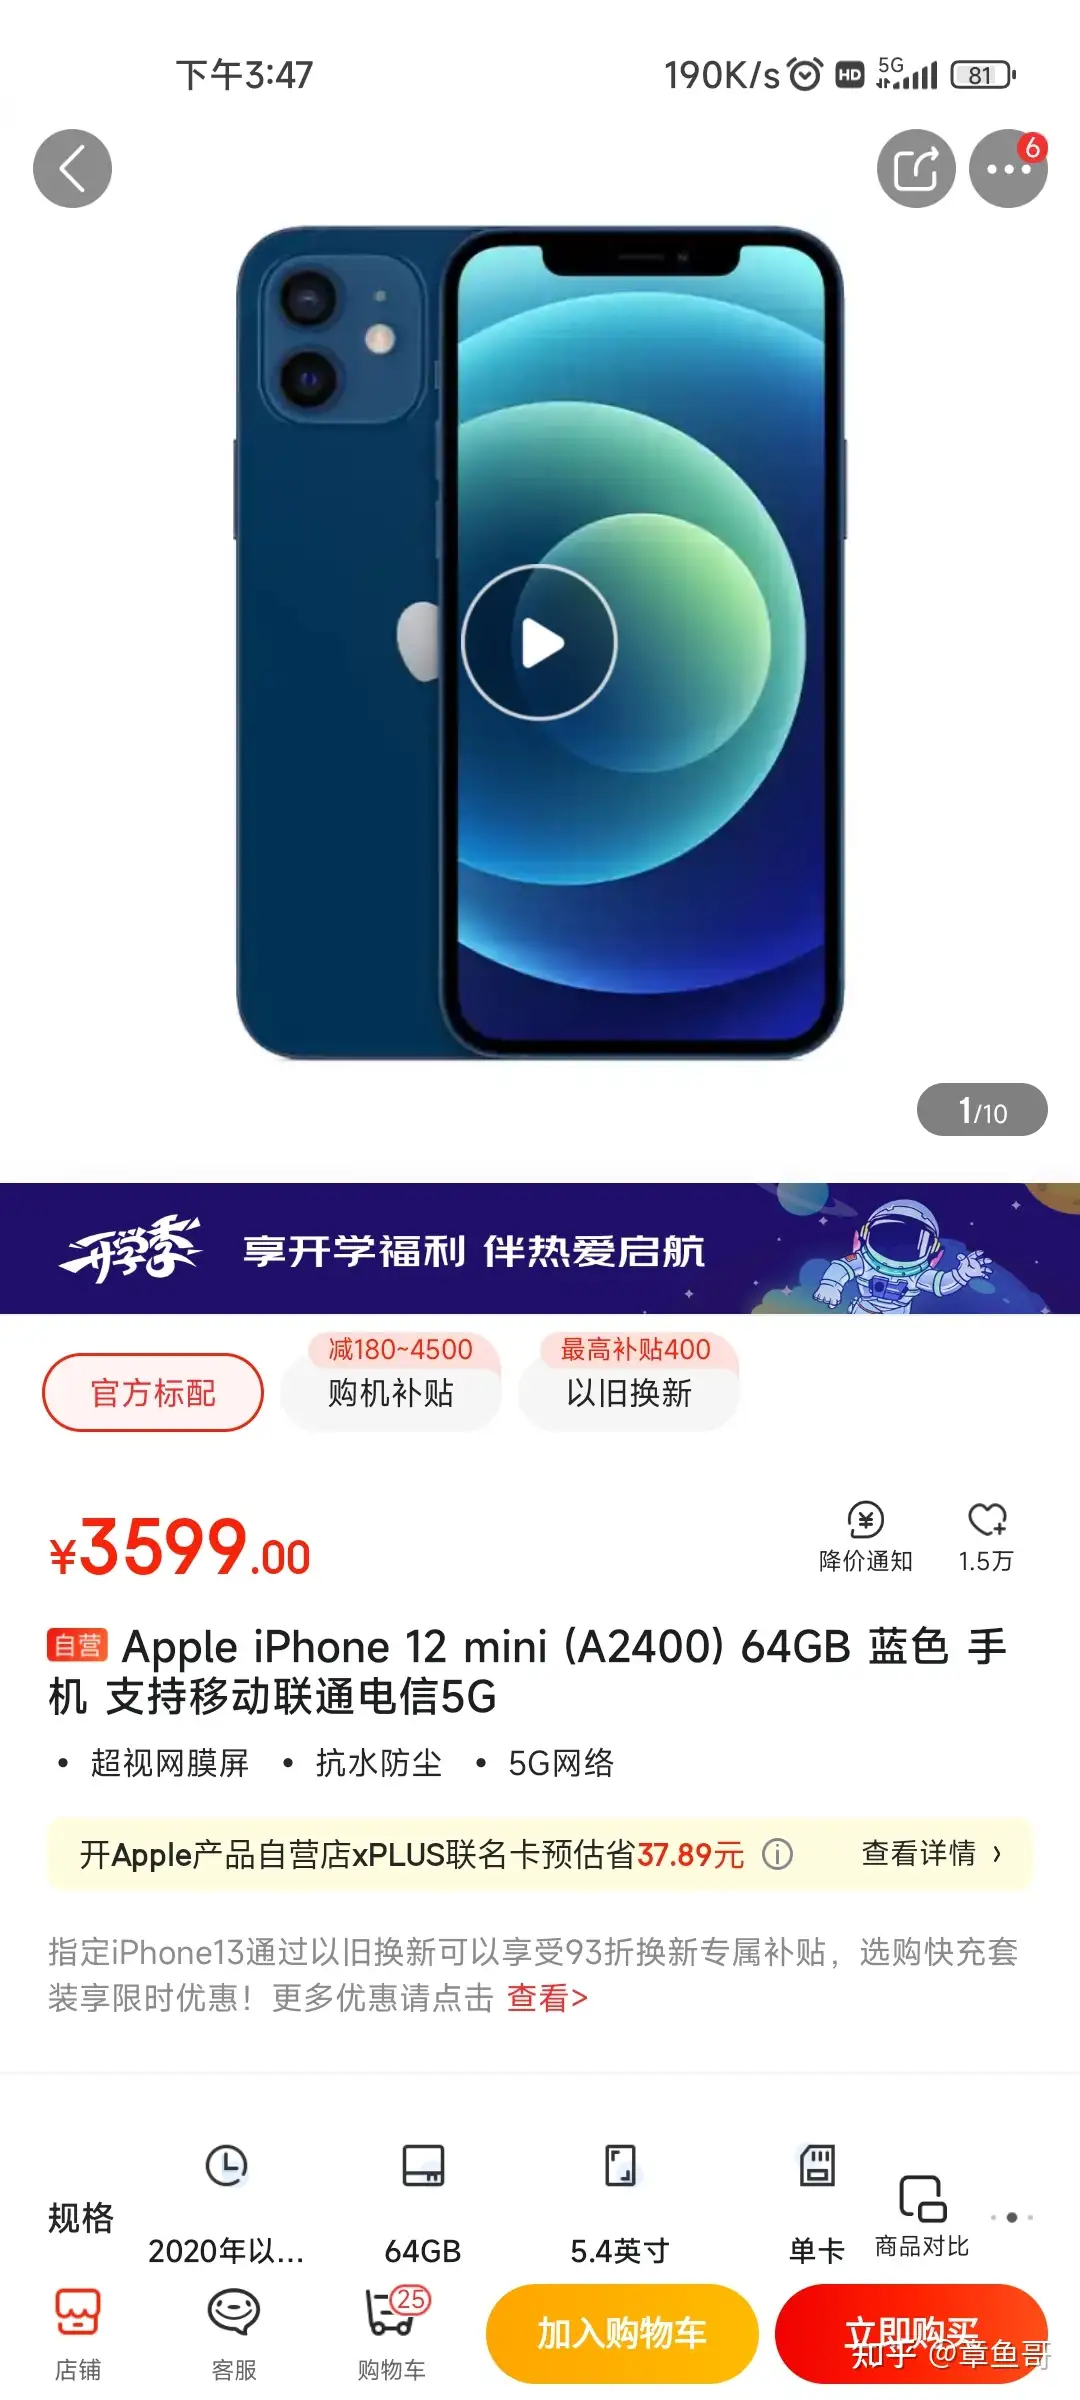 iPhone SE 第三代起售价3499 元，如何评价这一价格，值得购买吗？ - 知乎